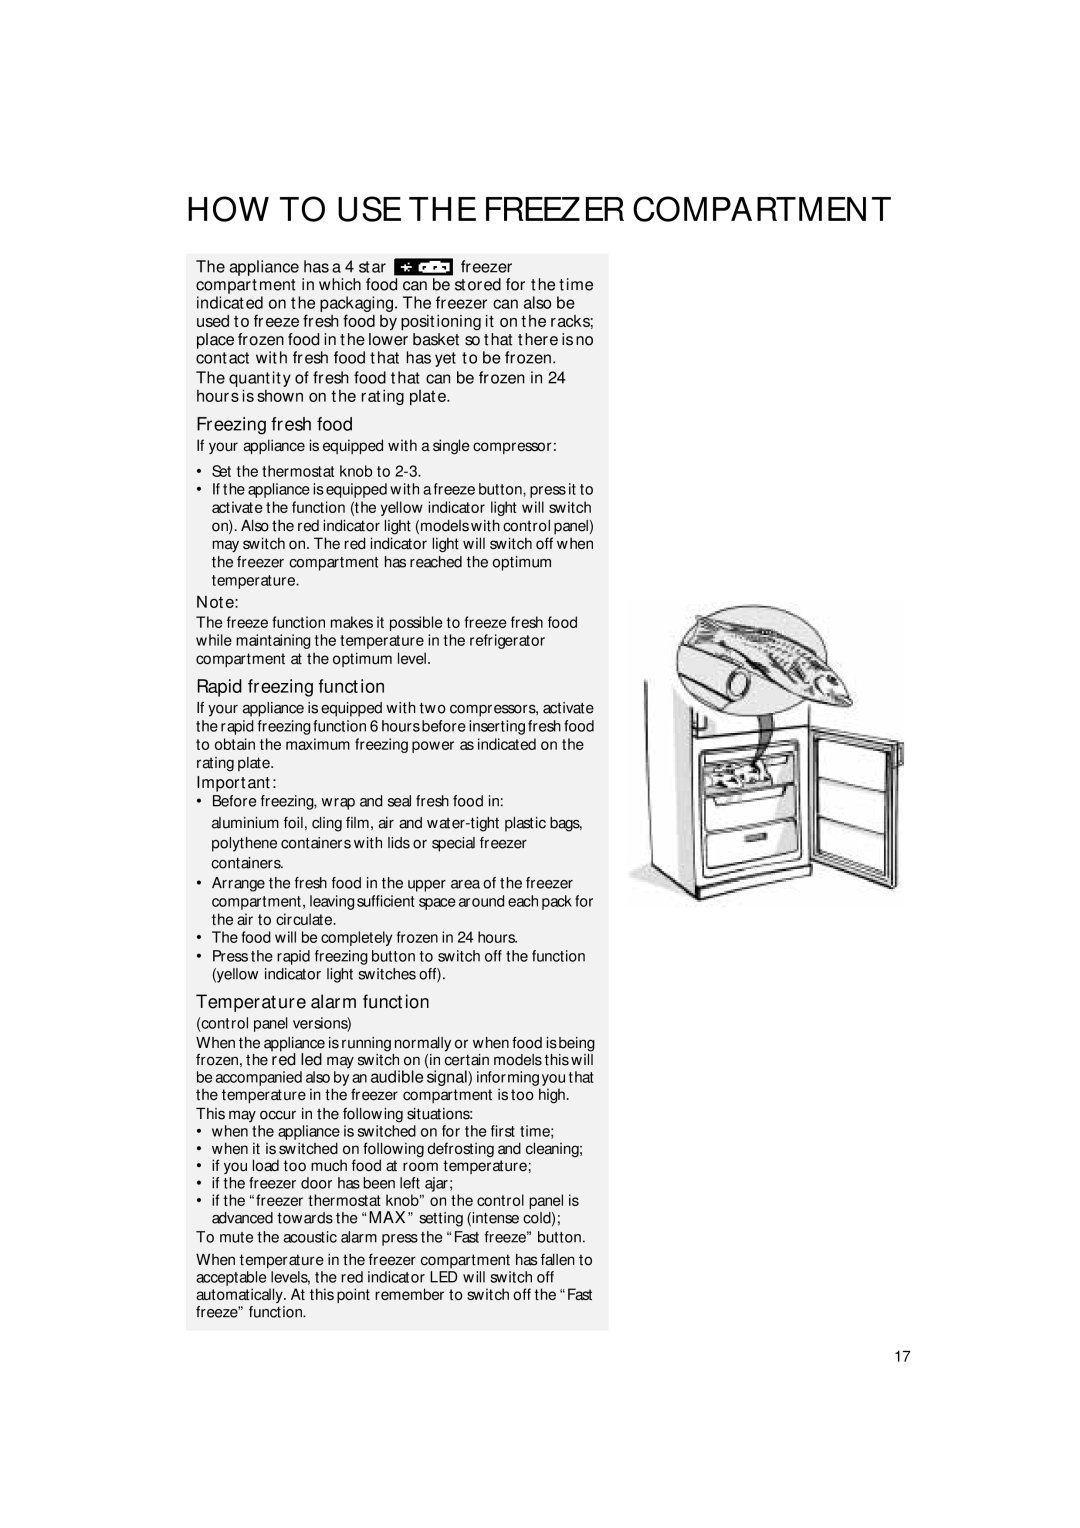 Smeg CR327AV1 How To Use The Freezer Compartment, Freezing fresh food, Rapid freezing function, Temperature alarm function 